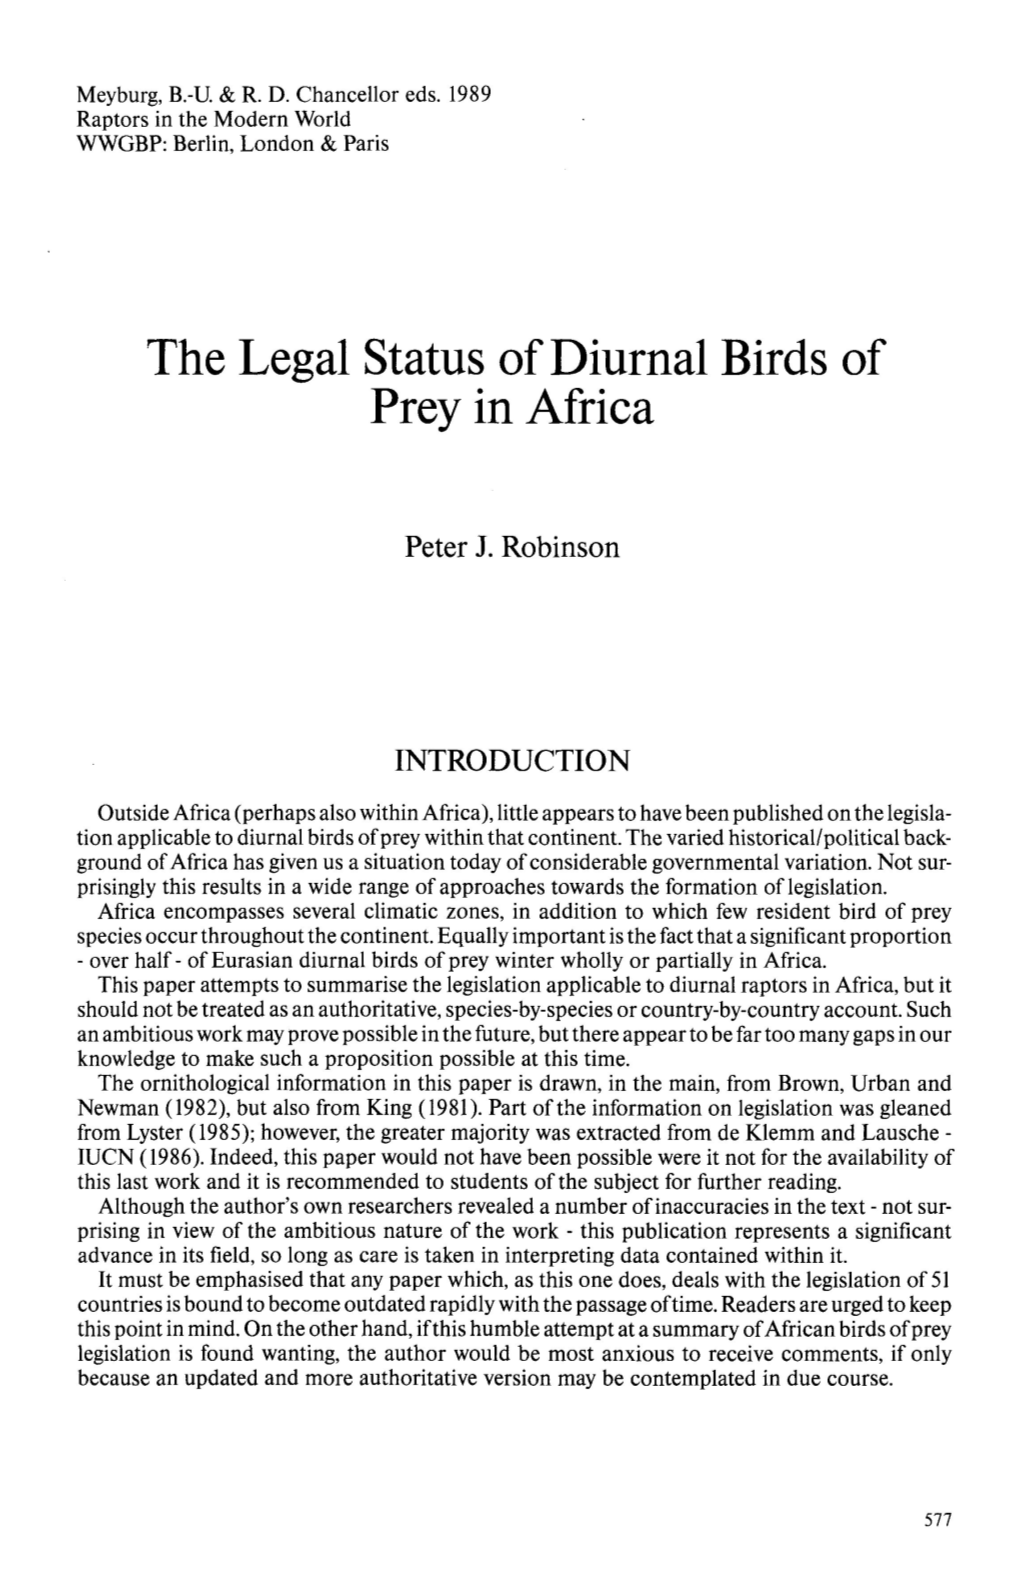 The Legal Status of Diurnal Birds of Prey in Africa